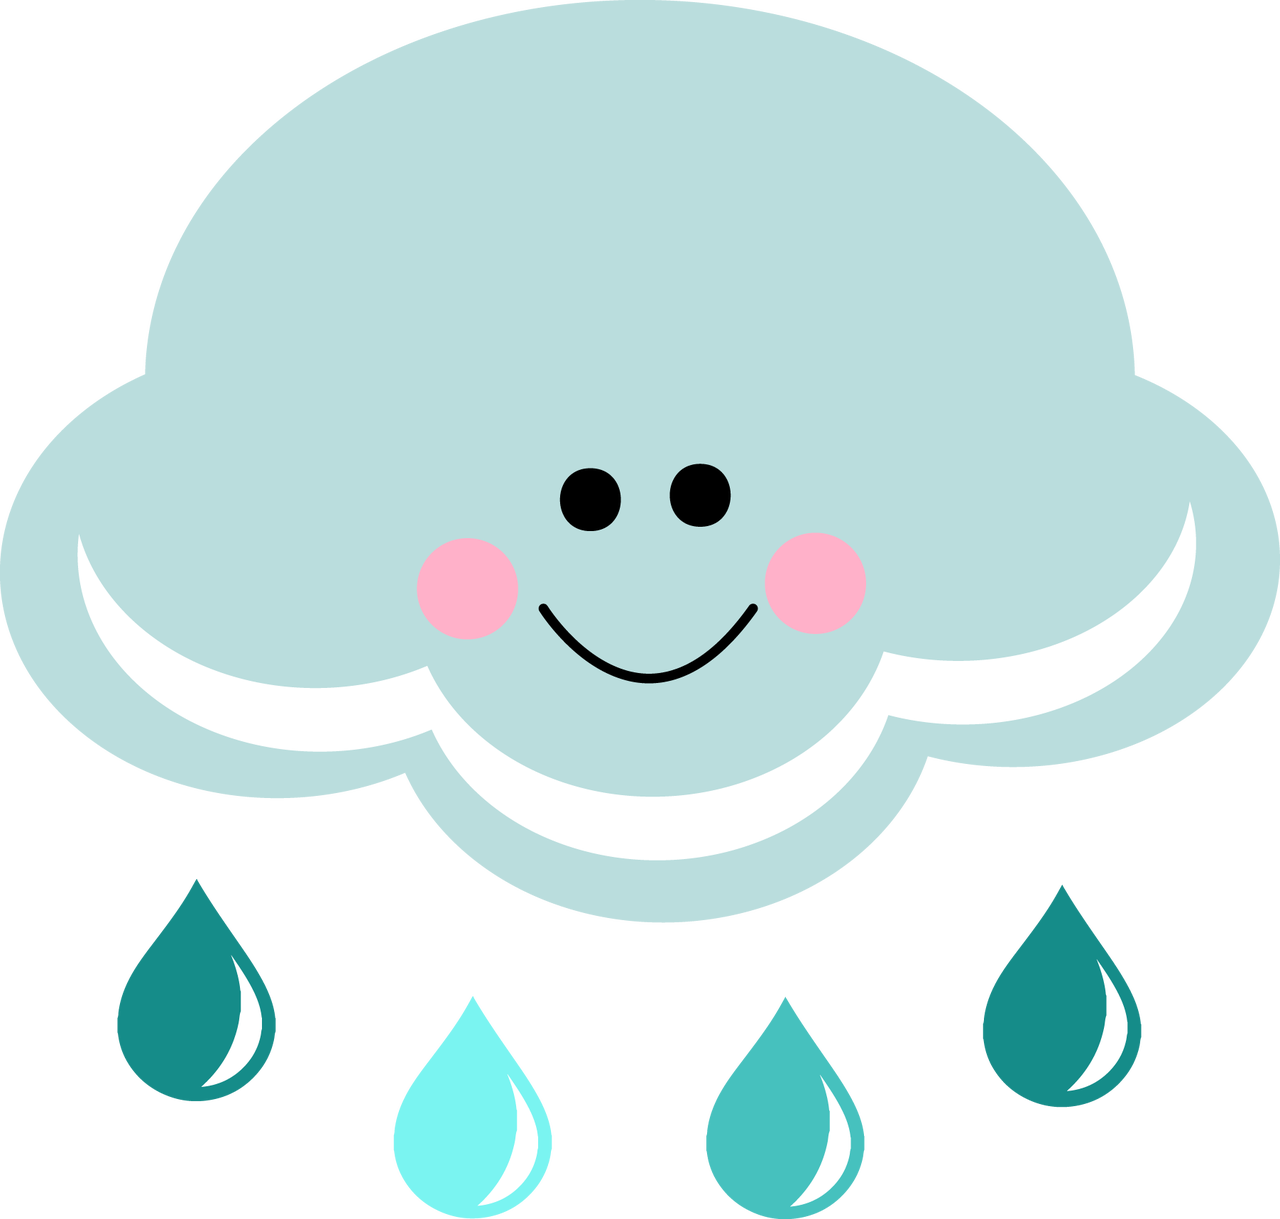 Ppbn designs rain cloud. Windy clipart happy